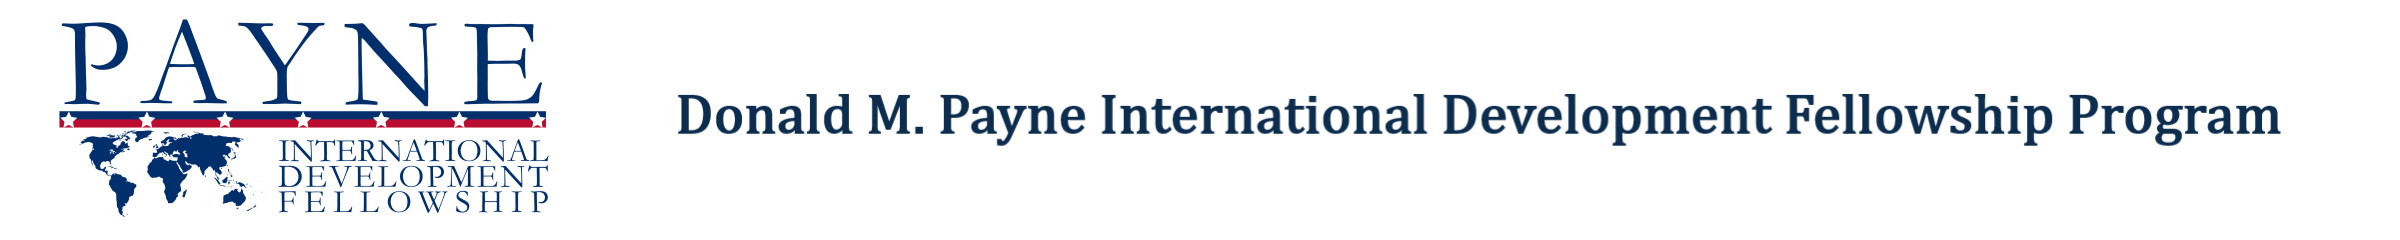 The Donald M. Payne International Development Fellowship Program logo